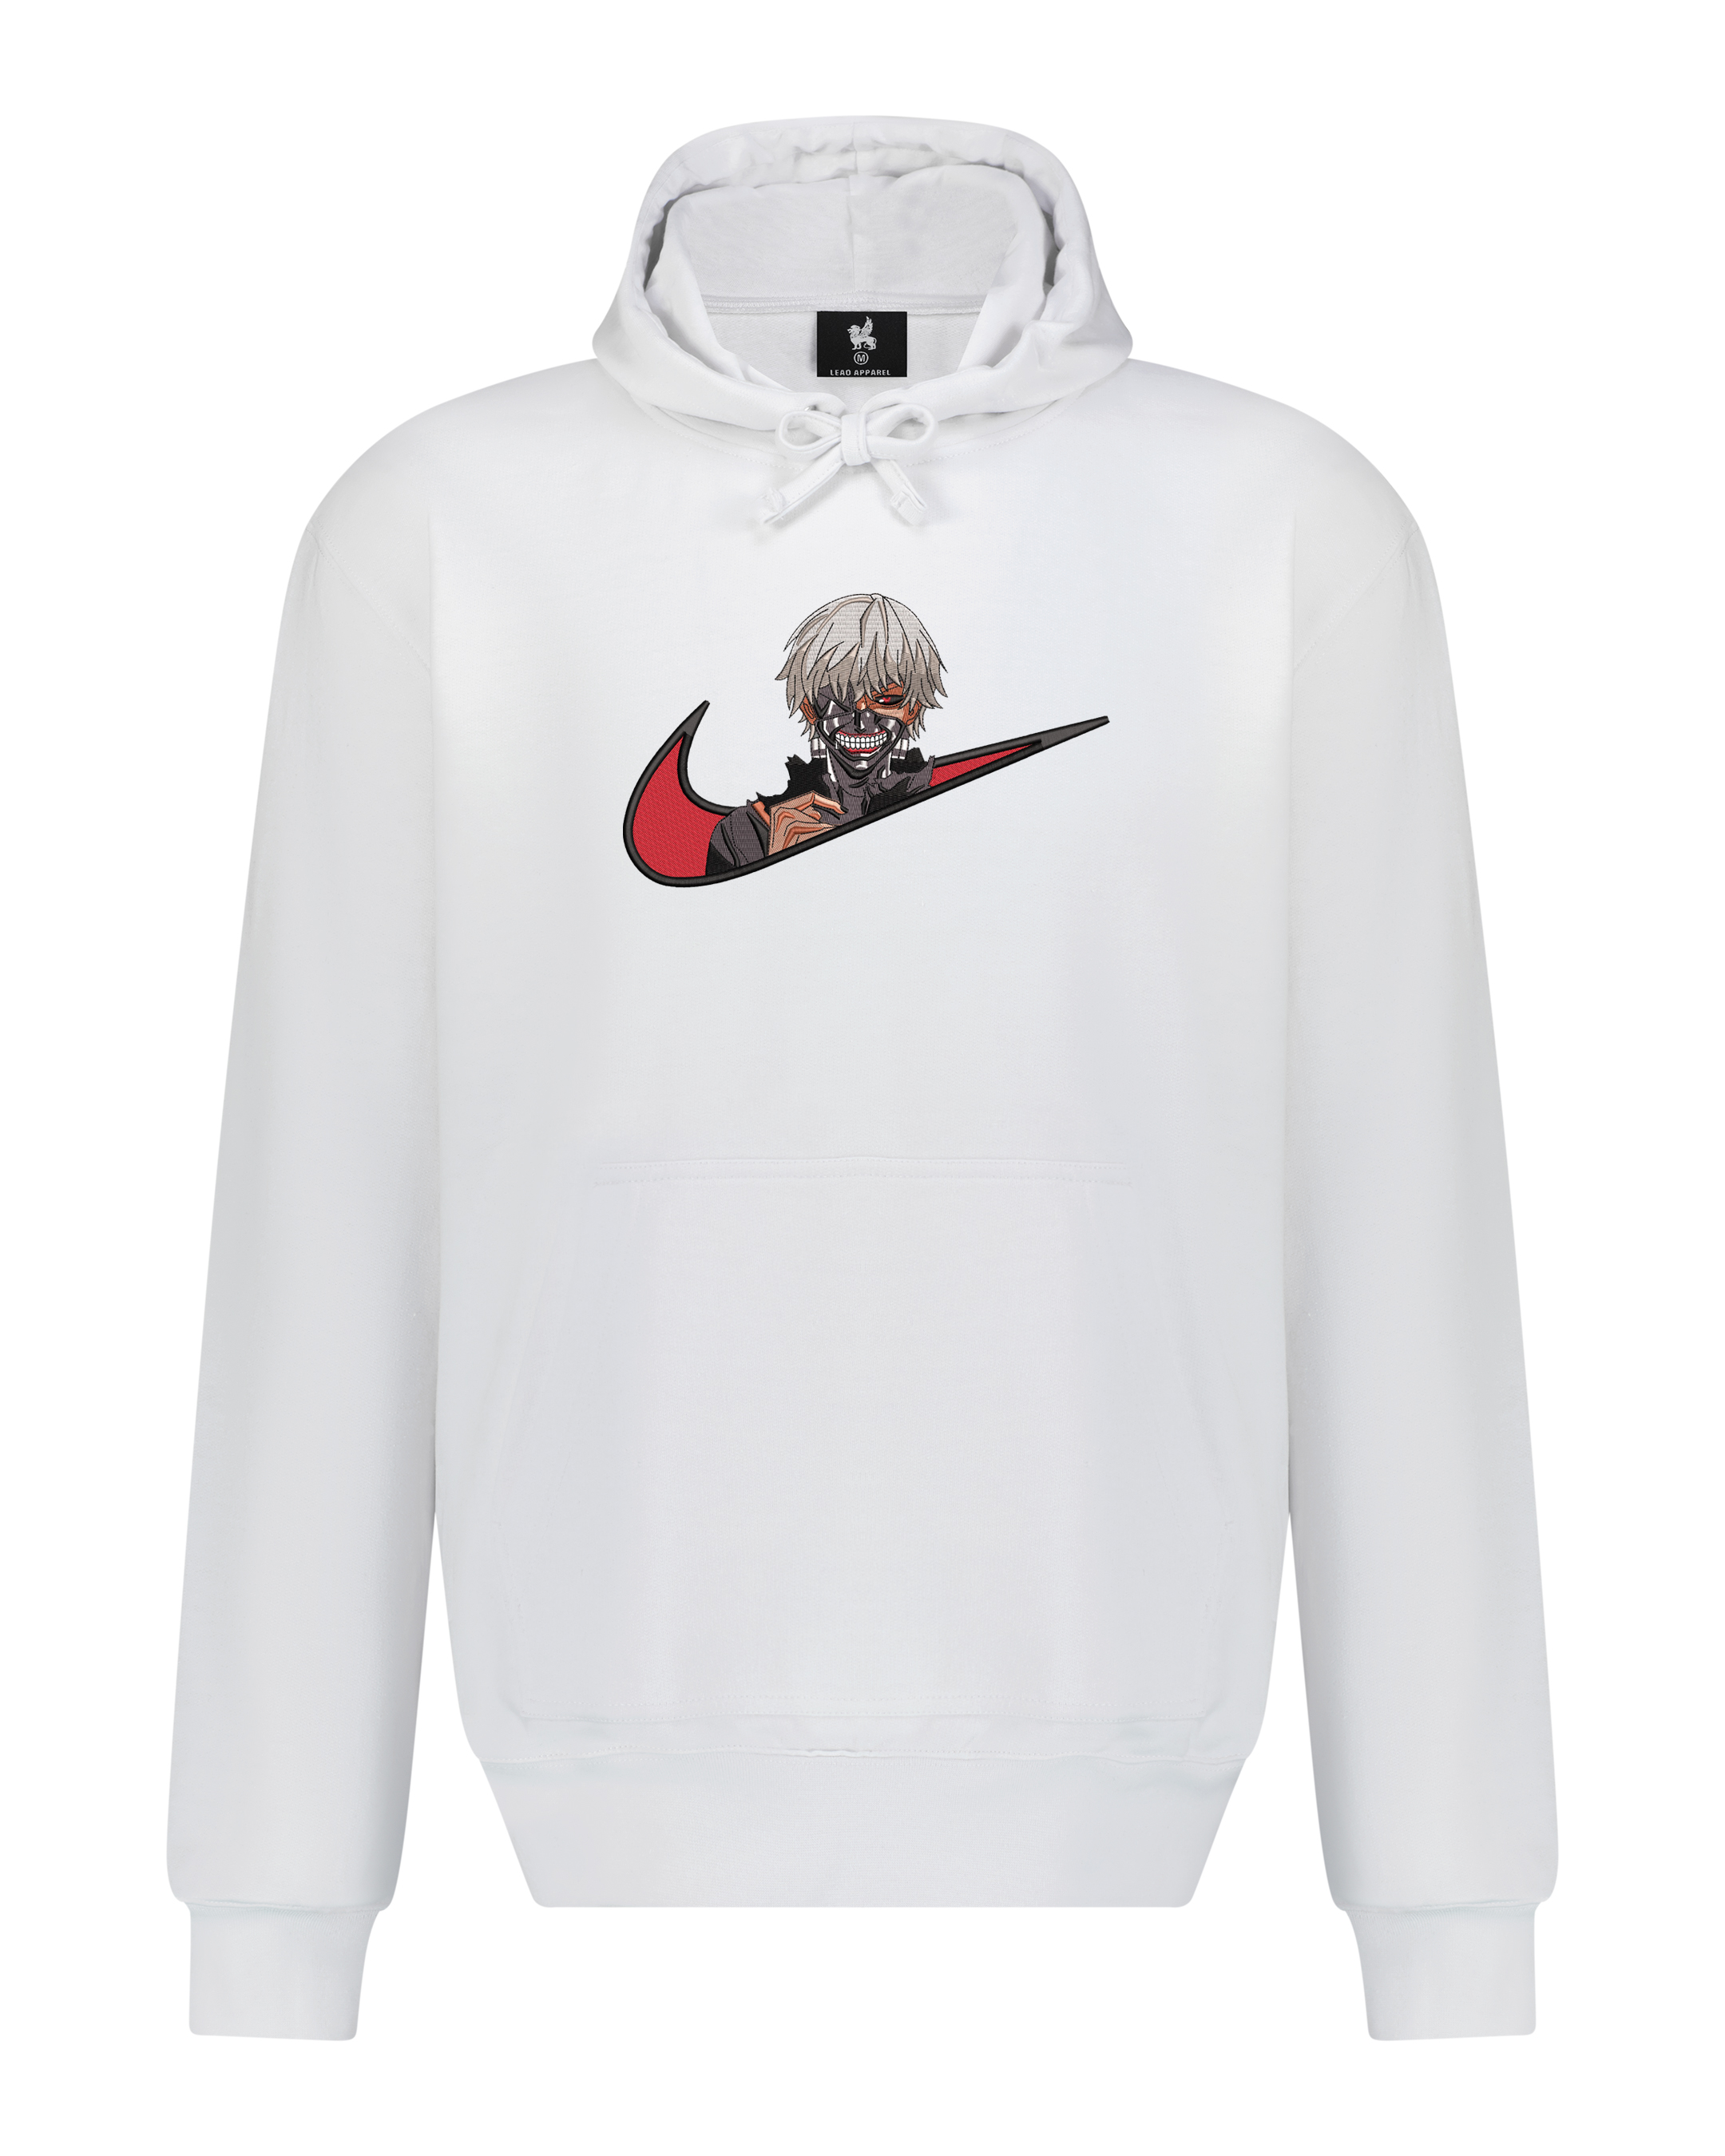 Nike logo x satoru gojo from anime jujutsu kaisen logo for otaku gym shirt  hoodie sweater long sleeve and tank top